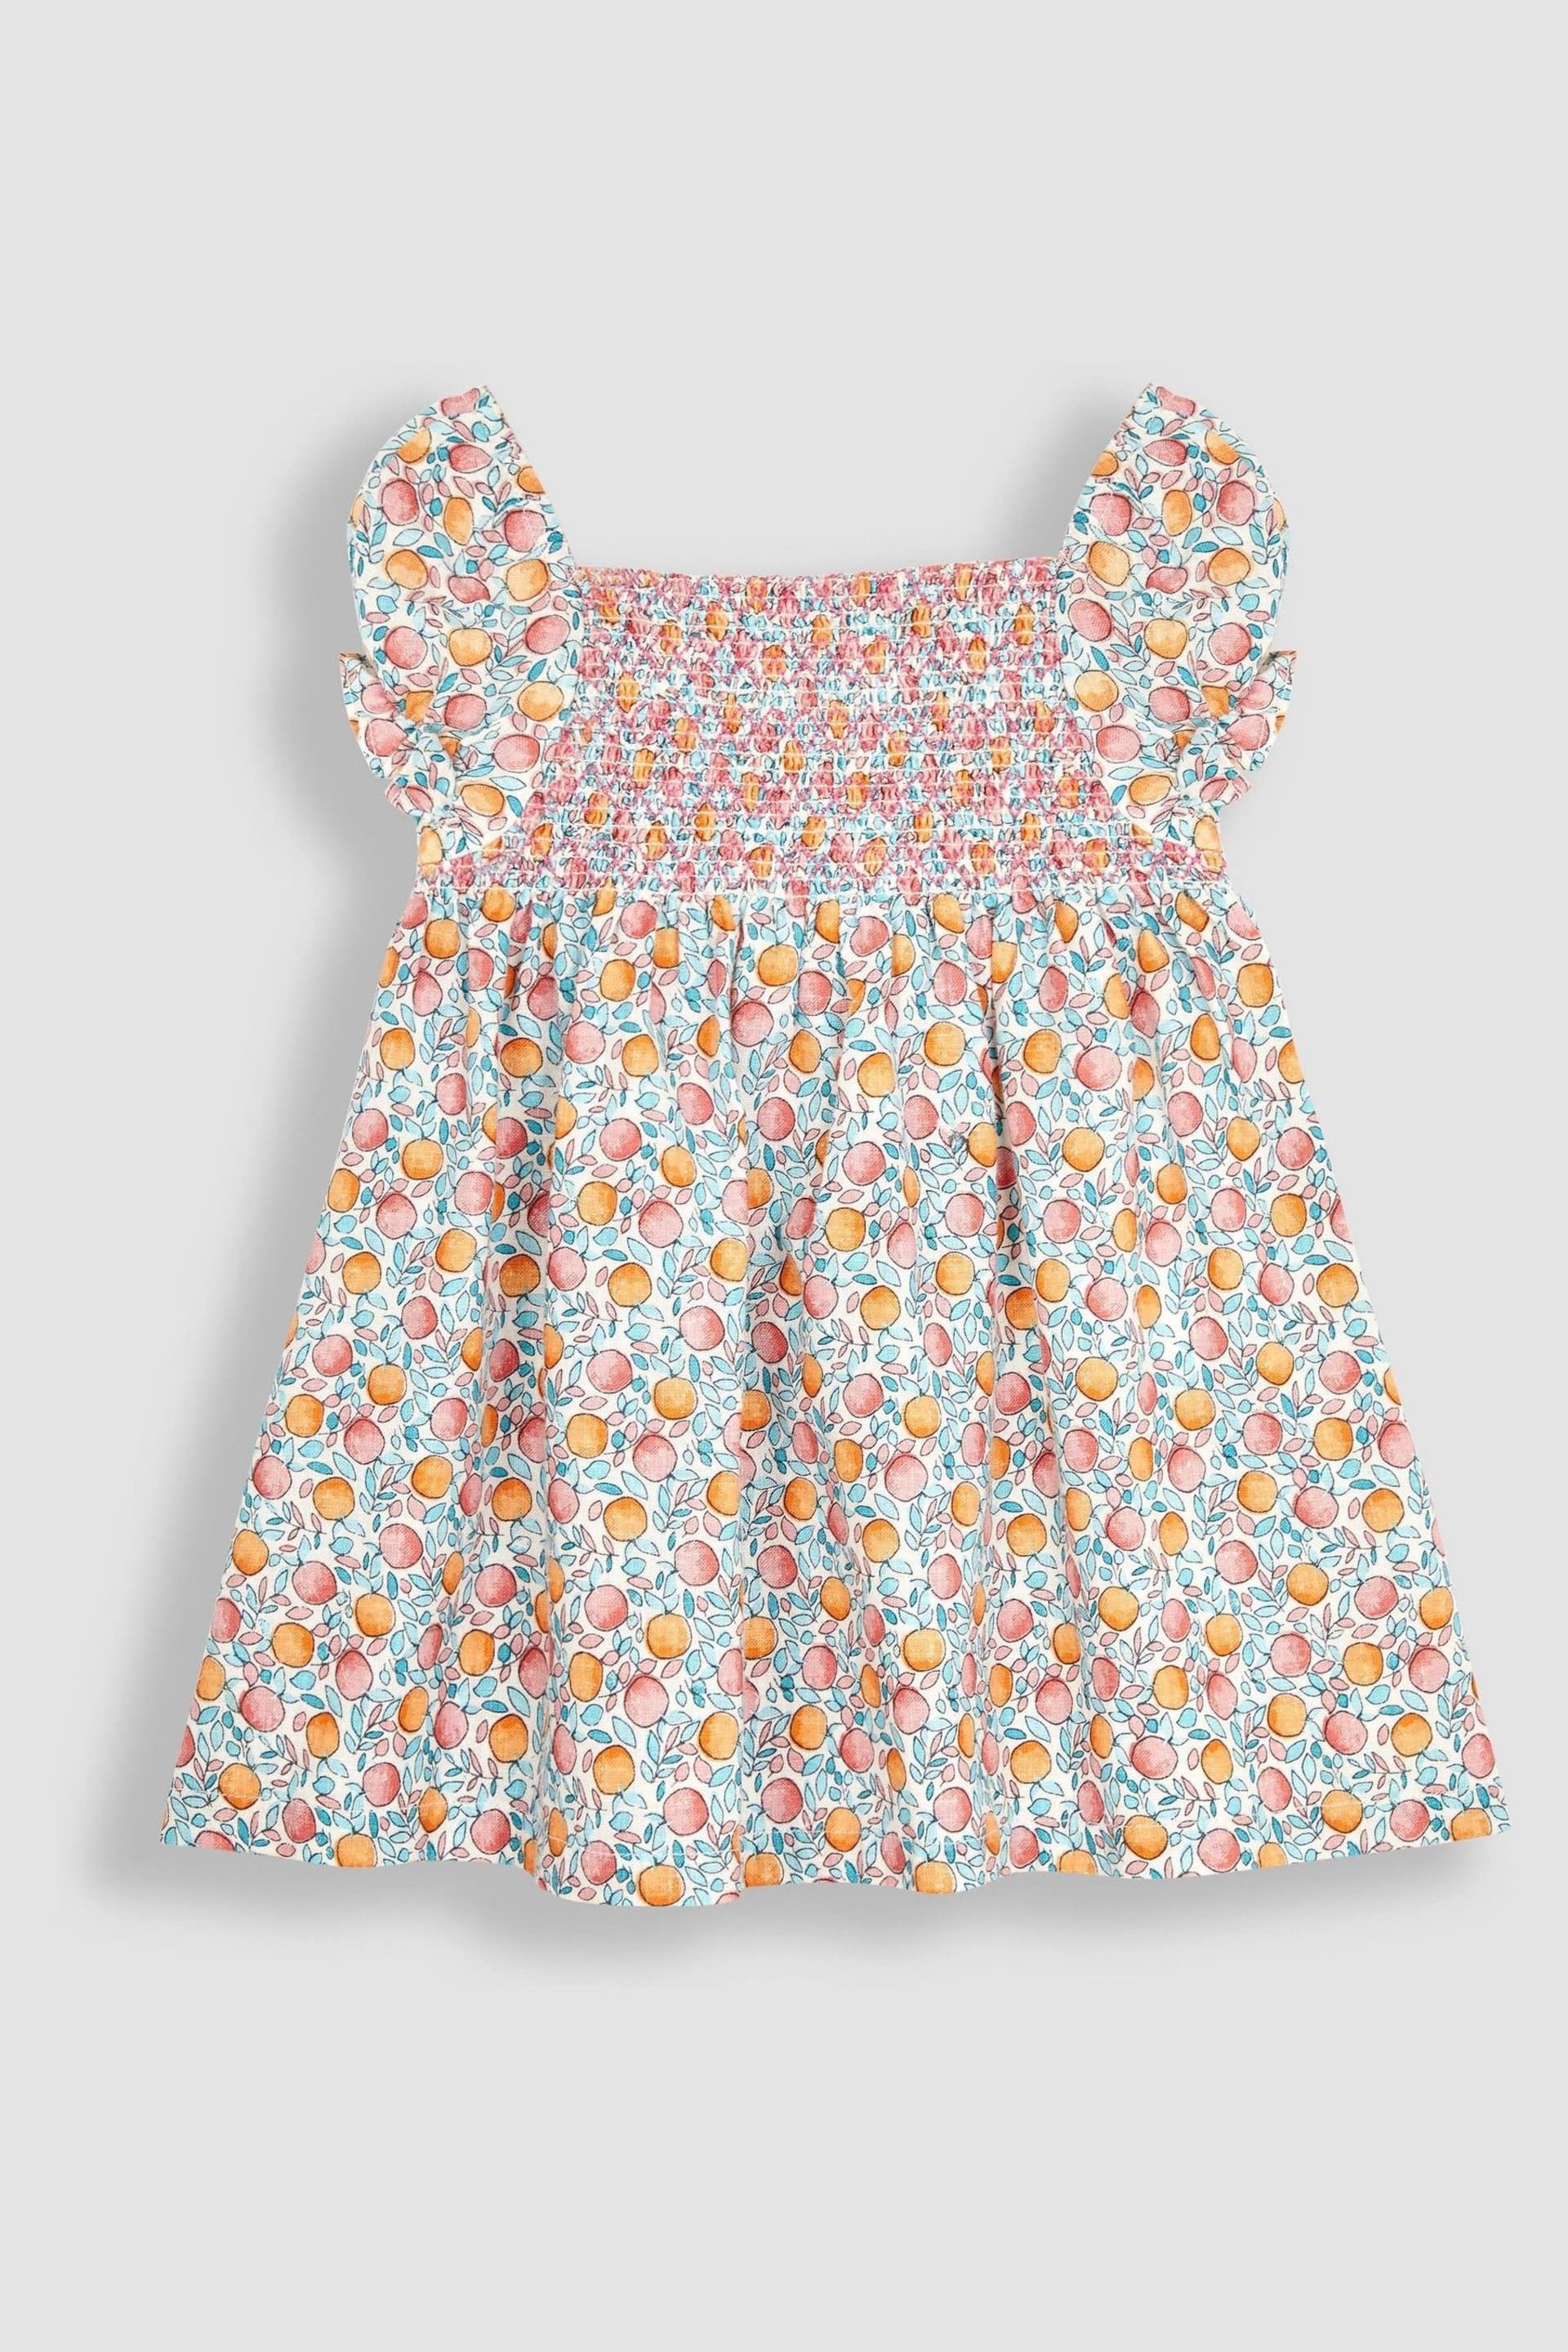 JoJo Maman Bébé Cream Apple & Peach Cotton Linen Smocked Baby Dress With Knickers - Image 2 of 4